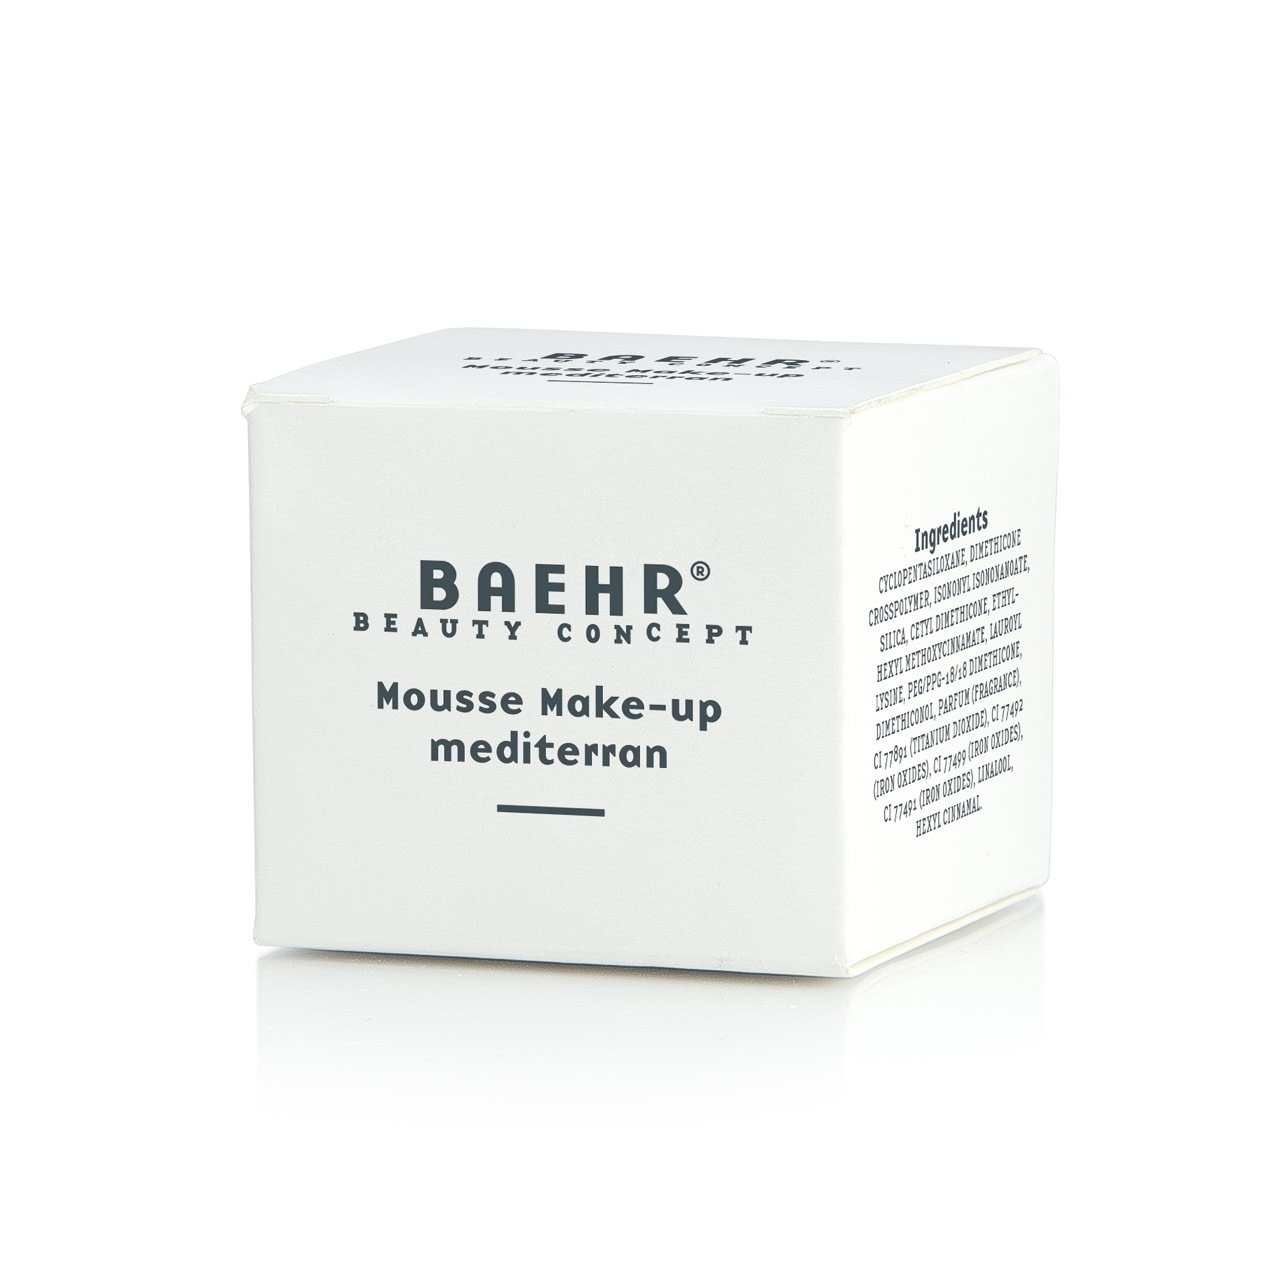 BAEHR BEAUTY CONCEPT Mousse Make-up mediterran 15 ml